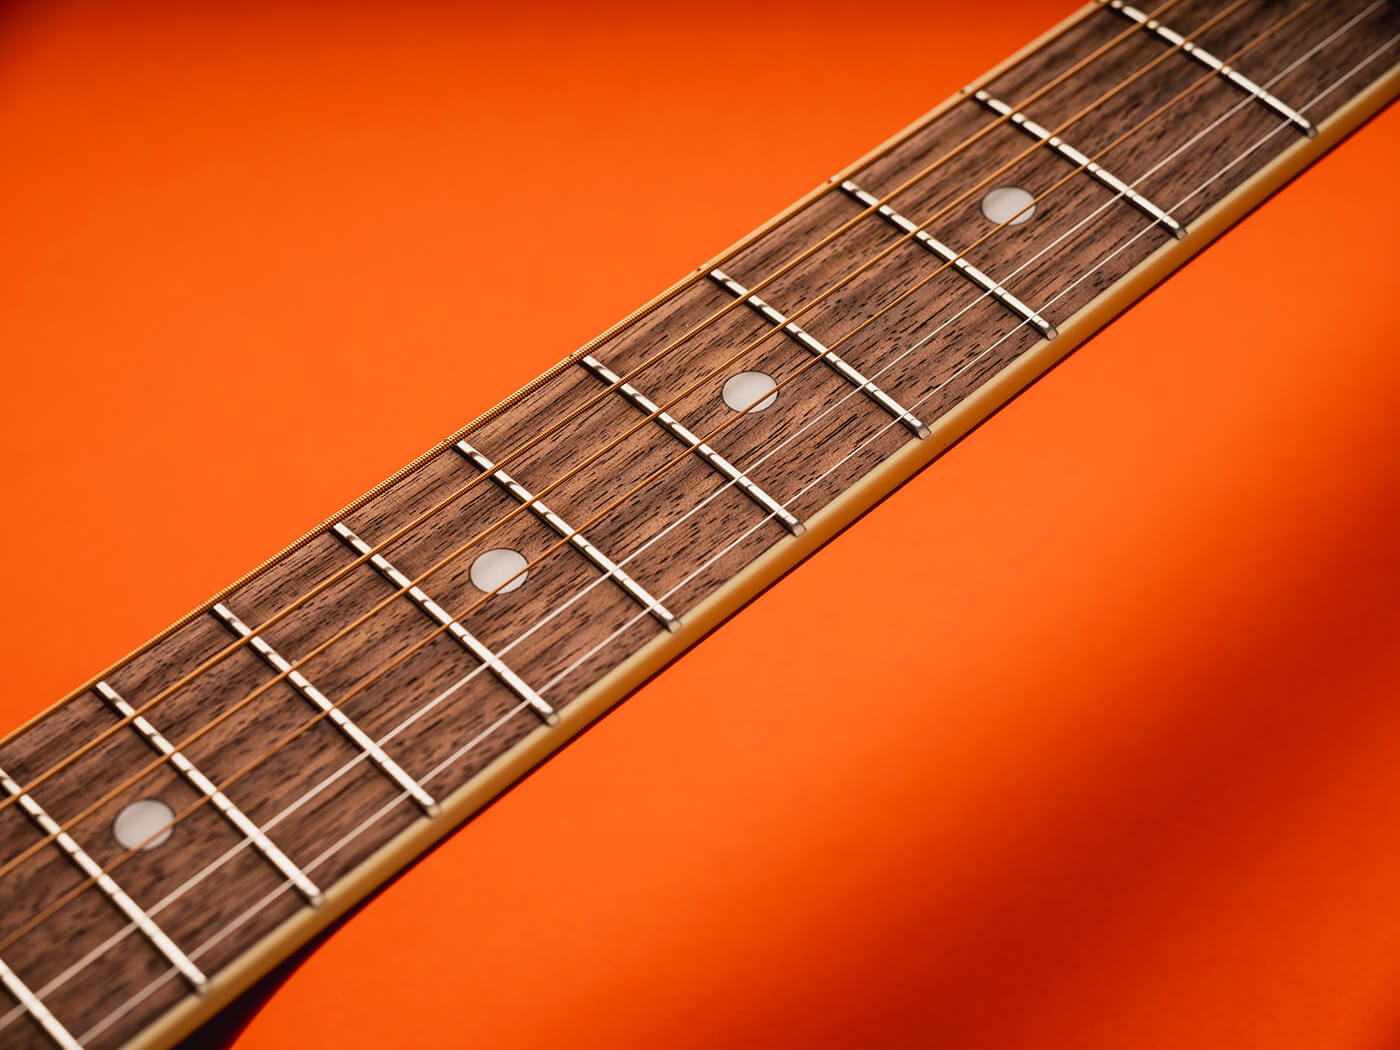 Gretsch Jim Dandy Dreadnought acoustic guitar, image by Adam Gasson